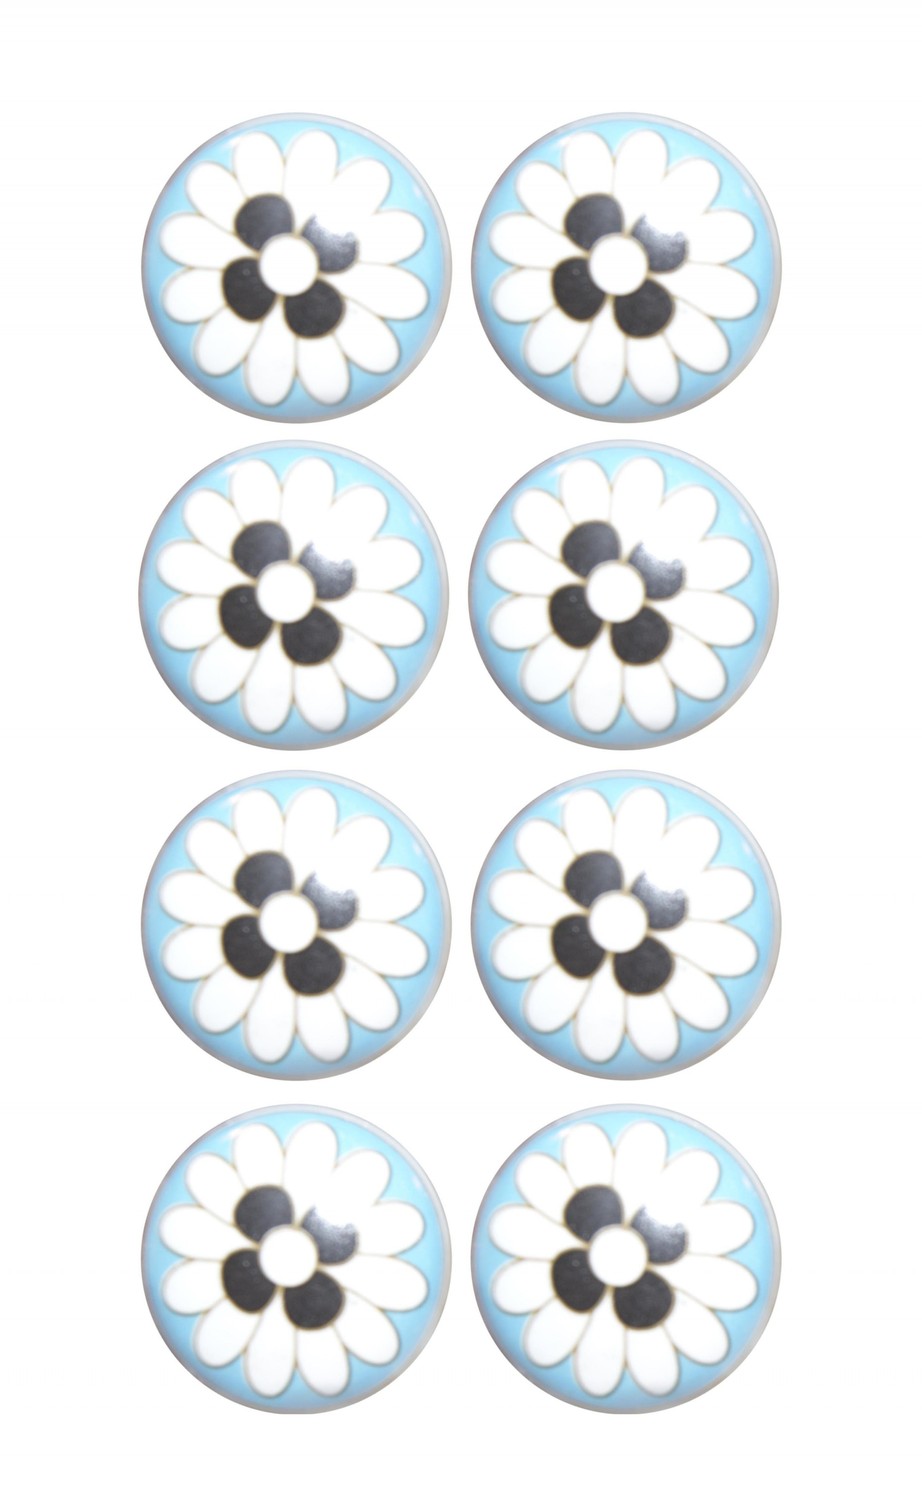 1.5" x 1.5" x 1.5" Light Blue, White And Black - Knobs 8-Pack